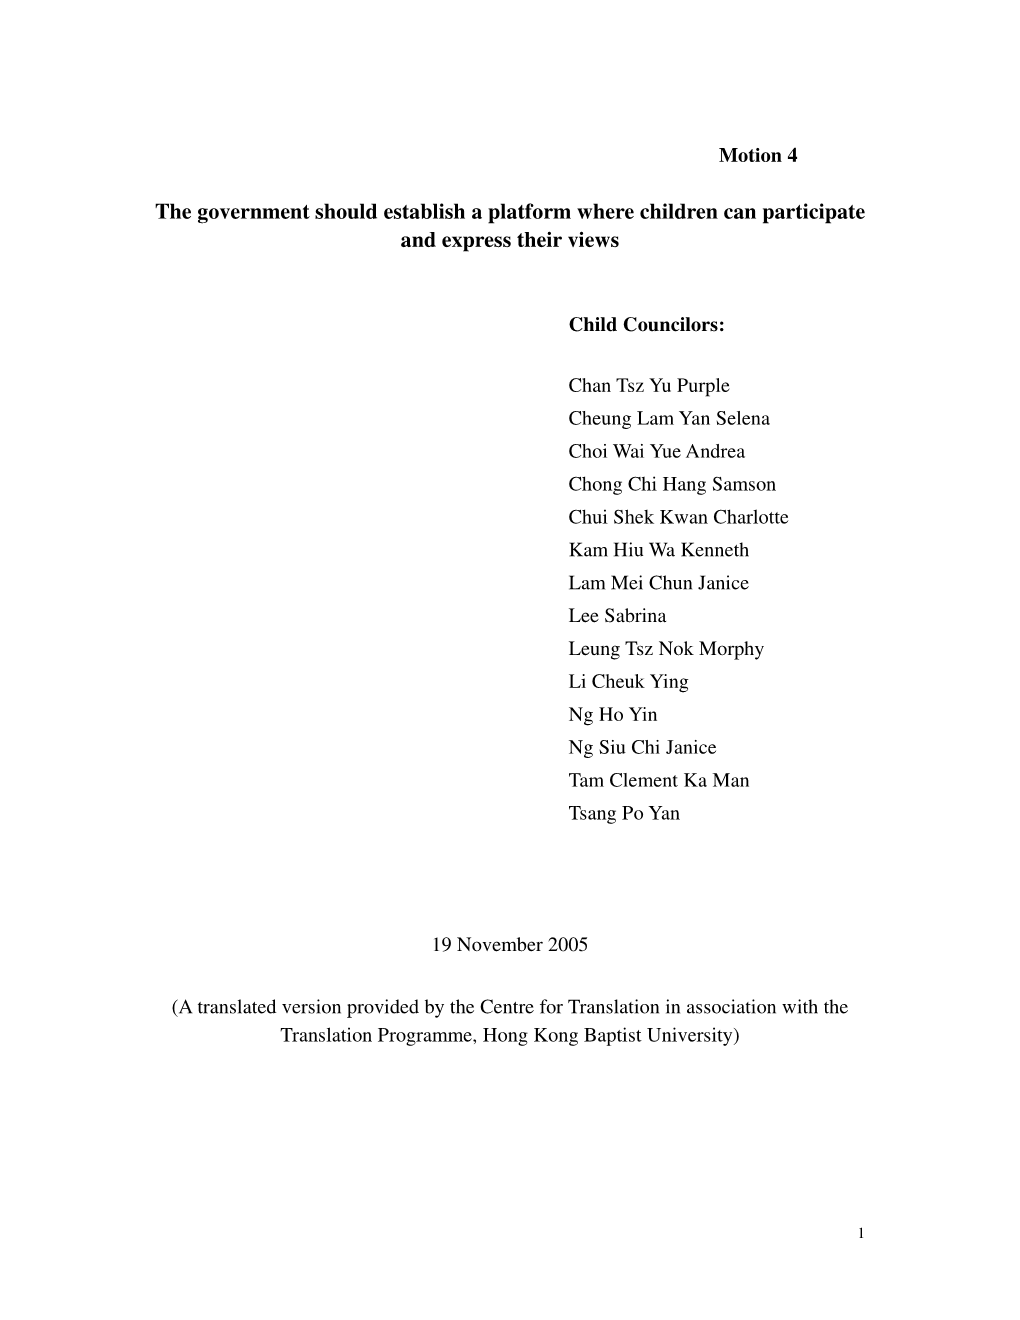 Motion 4: the Government Should Establish a Platform Where Children